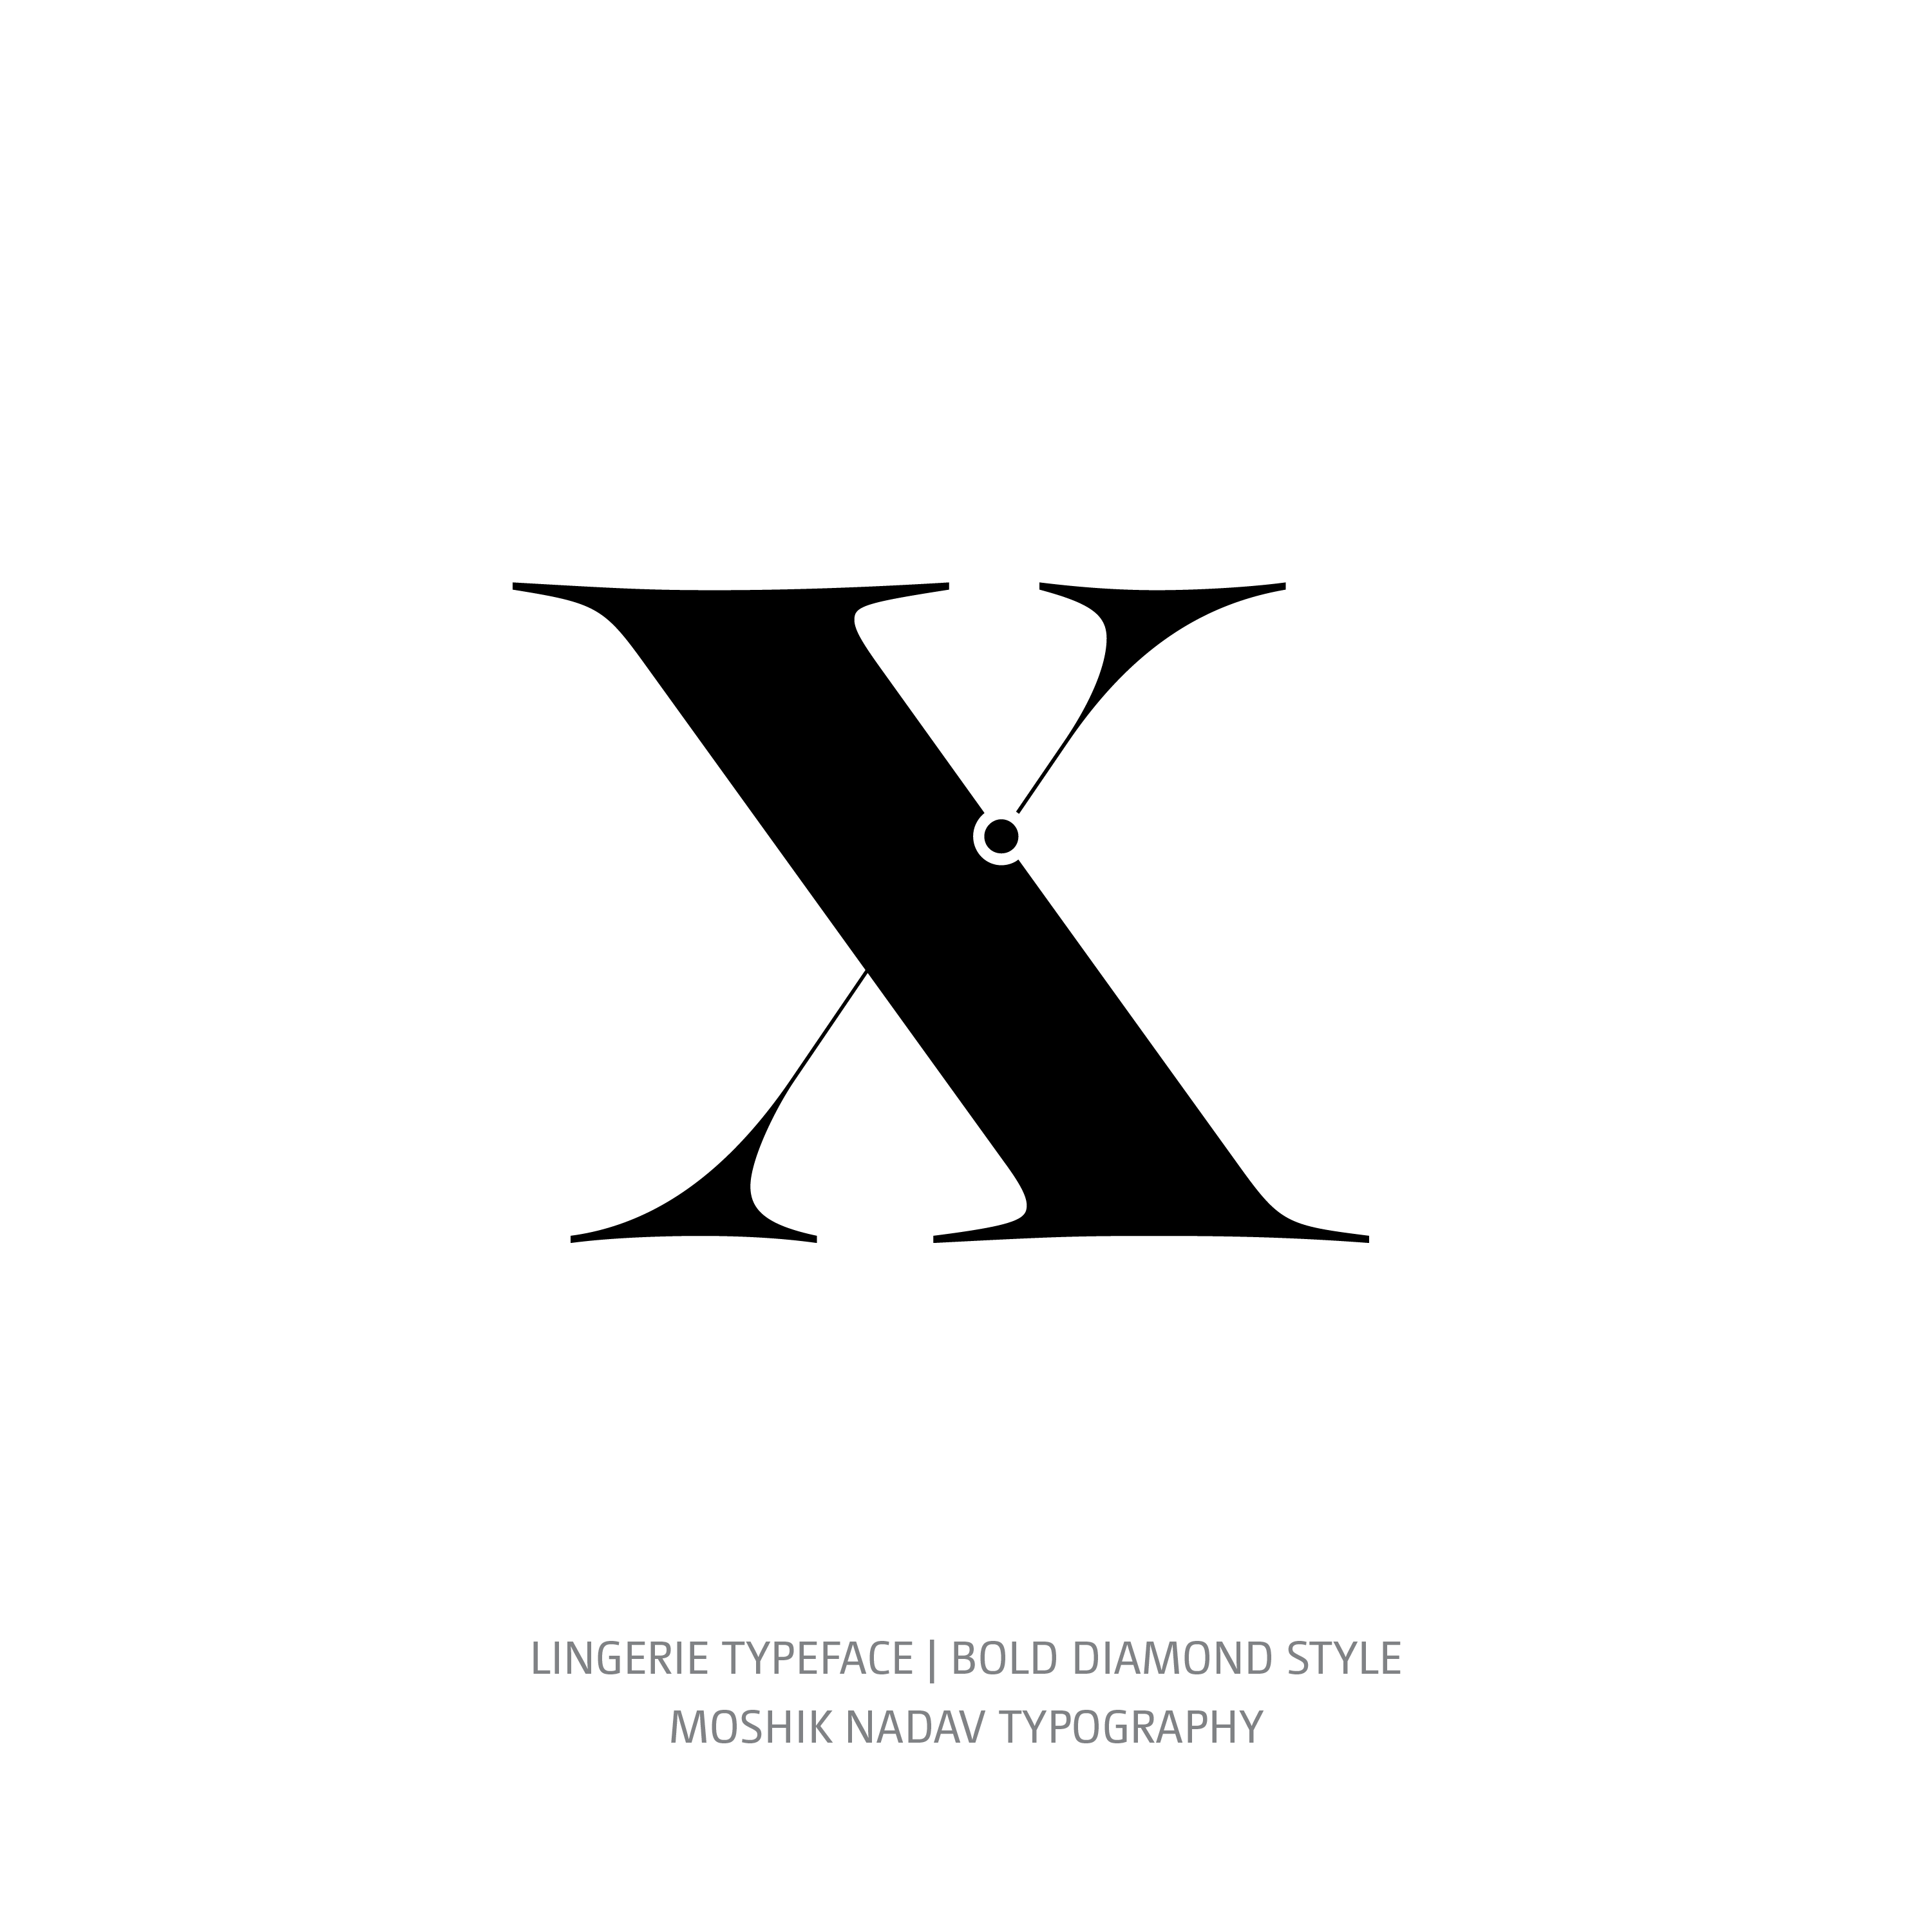 Lingerie Typeface Bold Diamond x